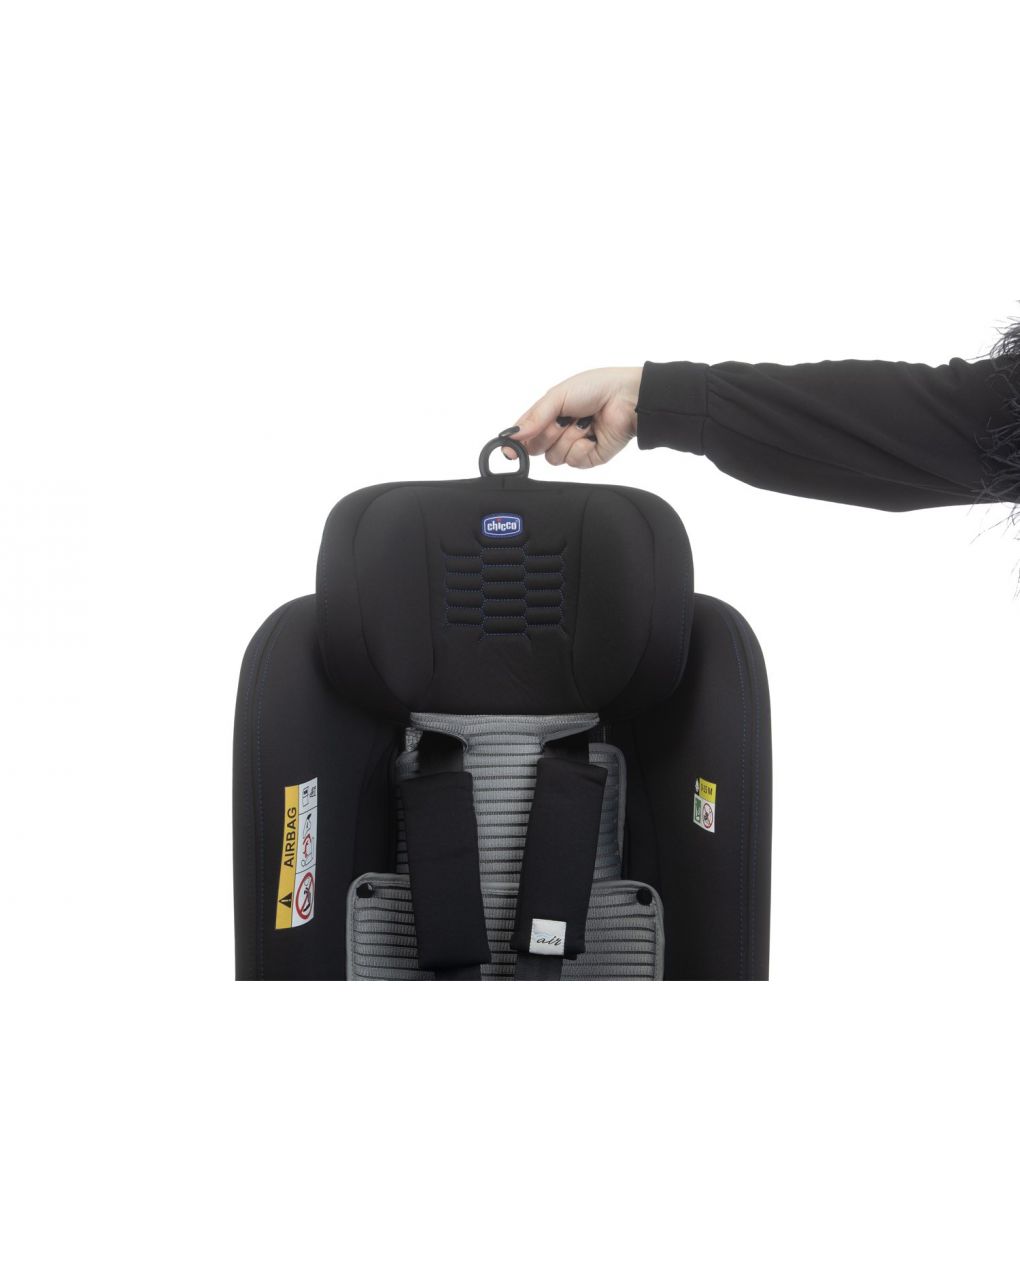 Chicco κάθισμα αυτοκινήτου seat2fit i-size air black (45-105 cm) - Chicco